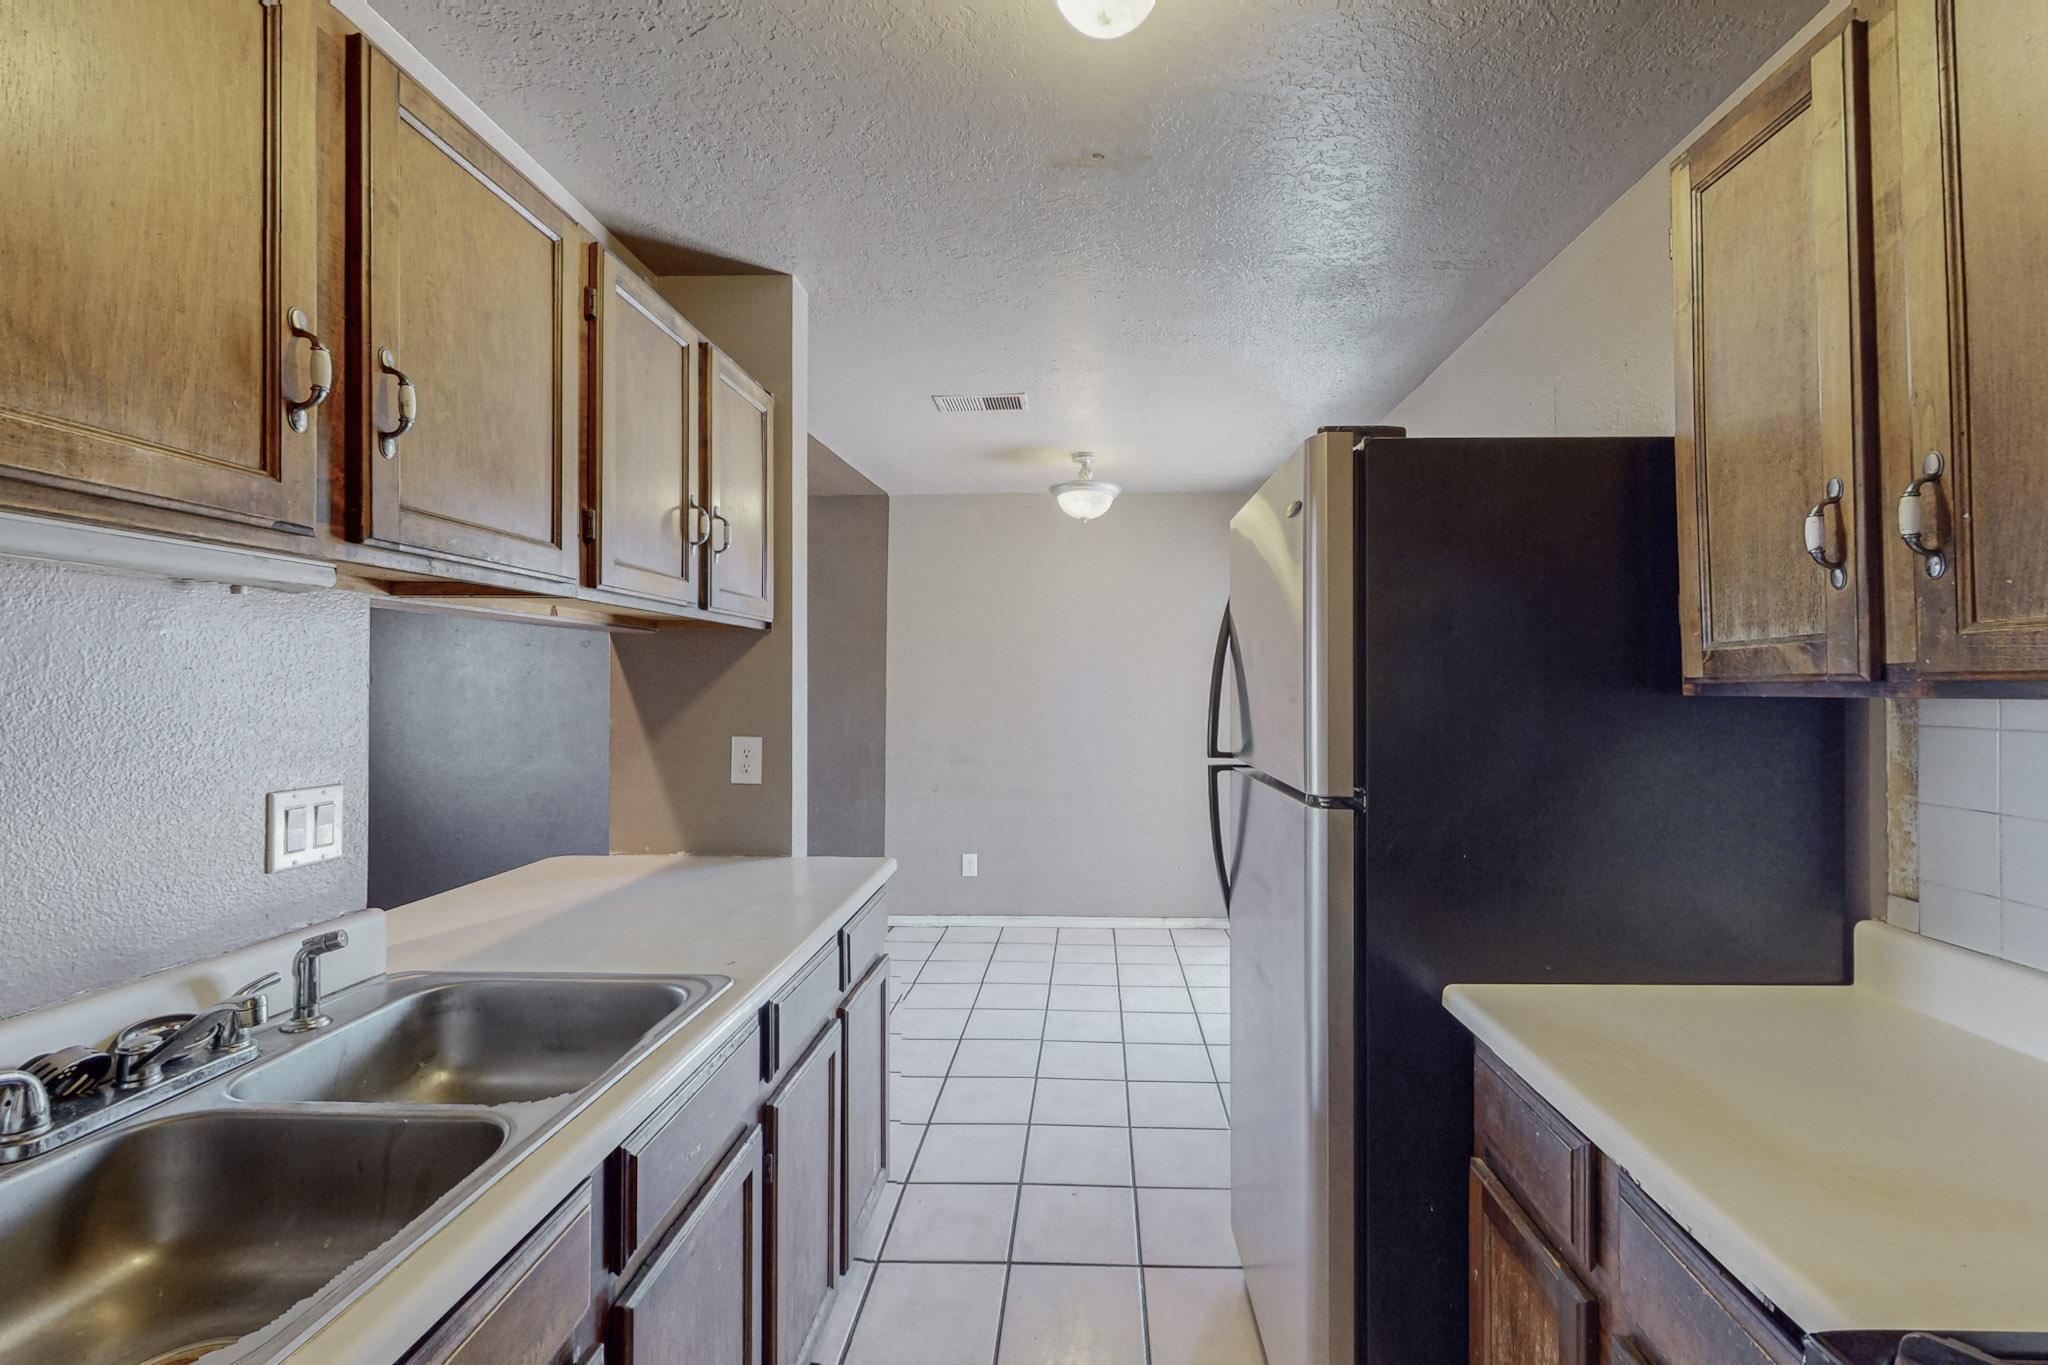 9301 Rhonda Avenue SW, Albuquerque, New Mexico 87121, 3 Bedrooms Bedrooms, ,1 BathroomBathrooms,Residential,For Sale,9301 Rhonda Avenue SW,1061010